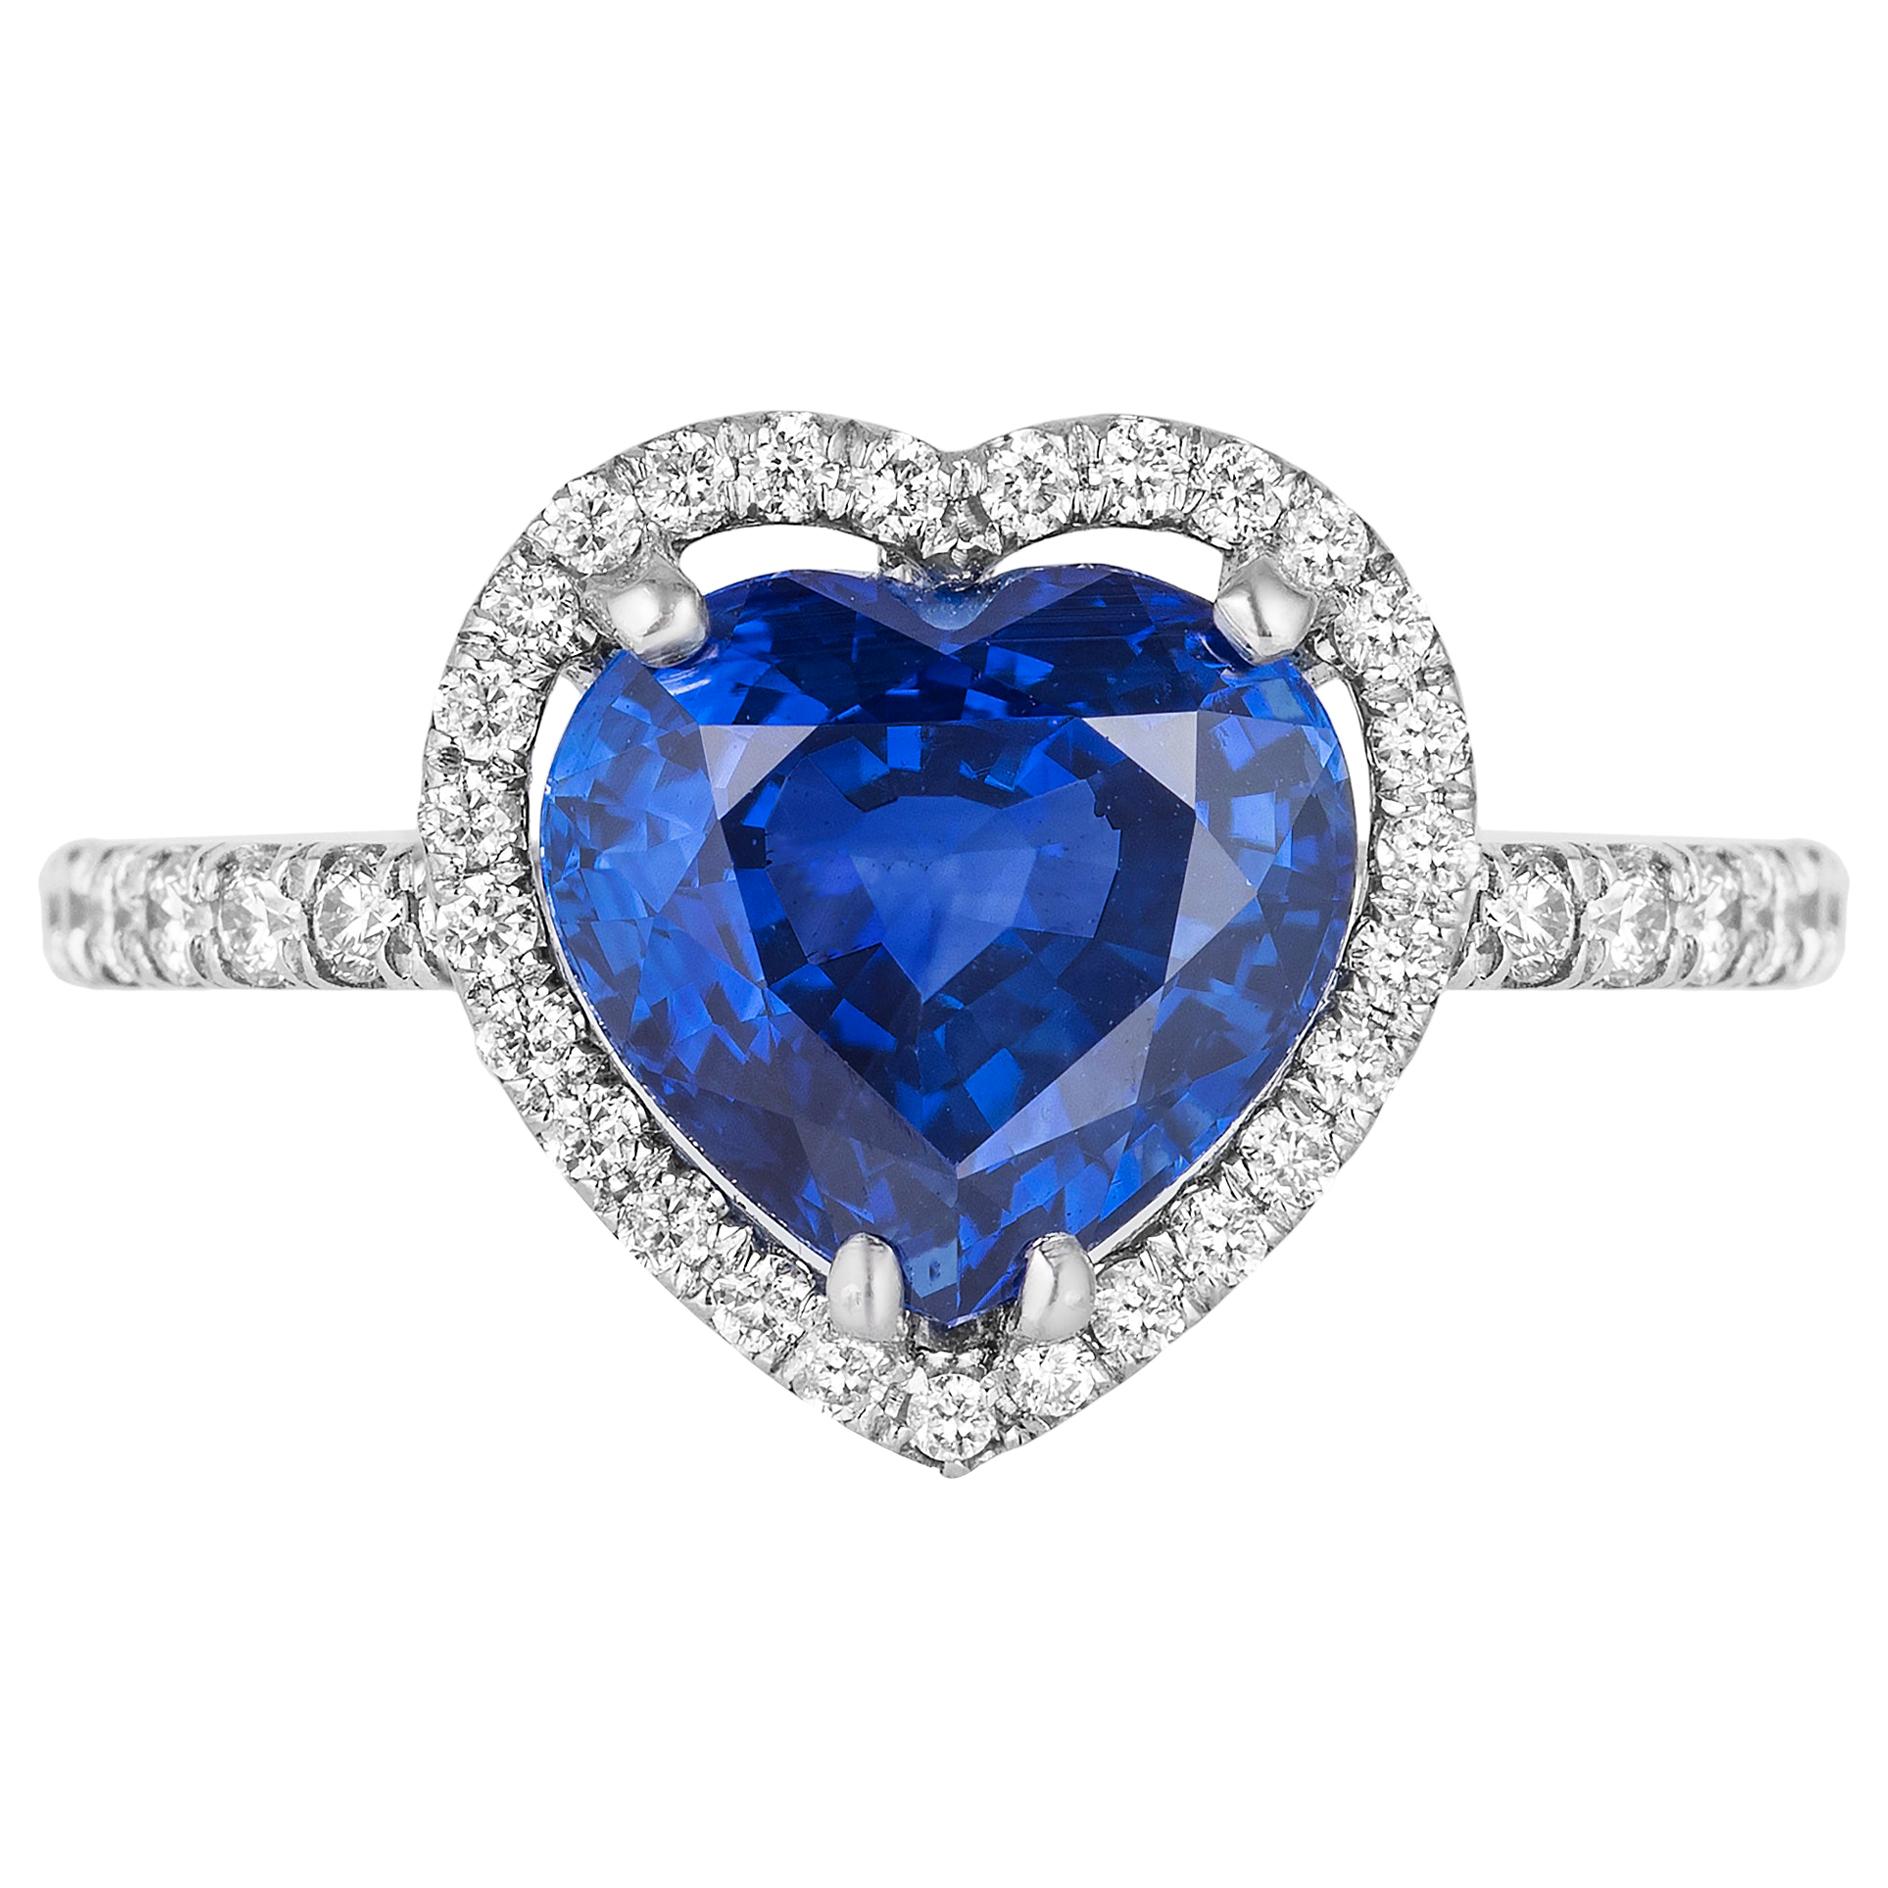 Andreoli Certified 3.78 Carat Ceylon Blue Sapphire Diamond Platinum Heart Ring